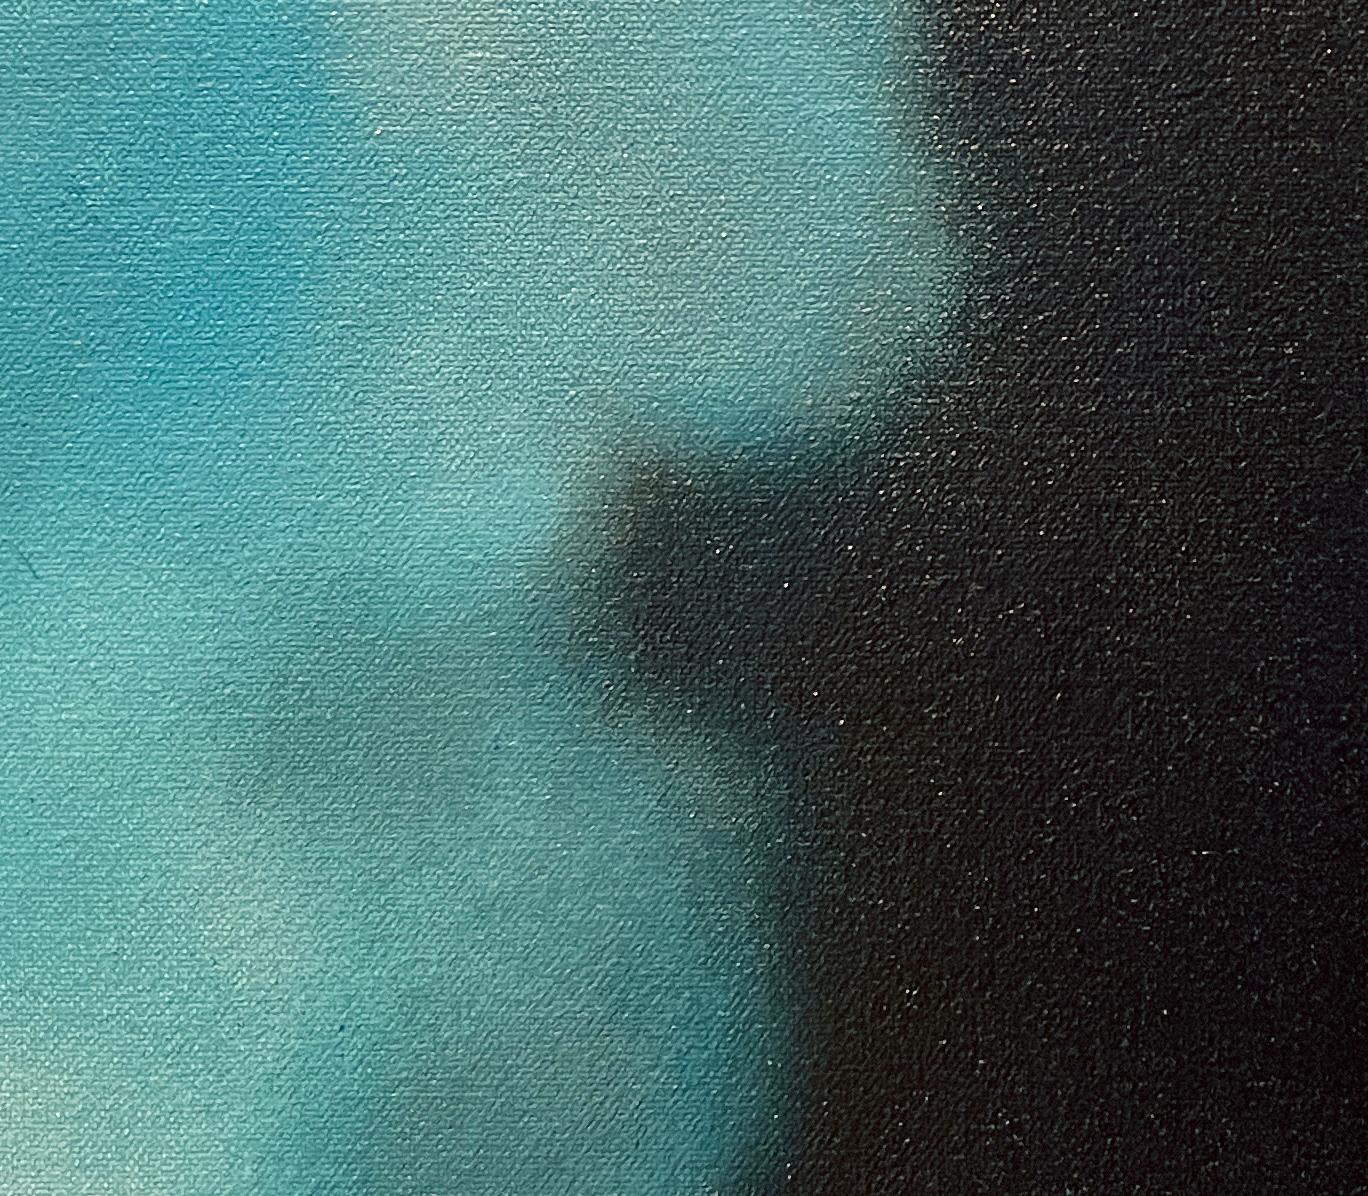 NIGHT PLUNGE II - Contemporary Realism / Water / Ocean / Deep Blue 2